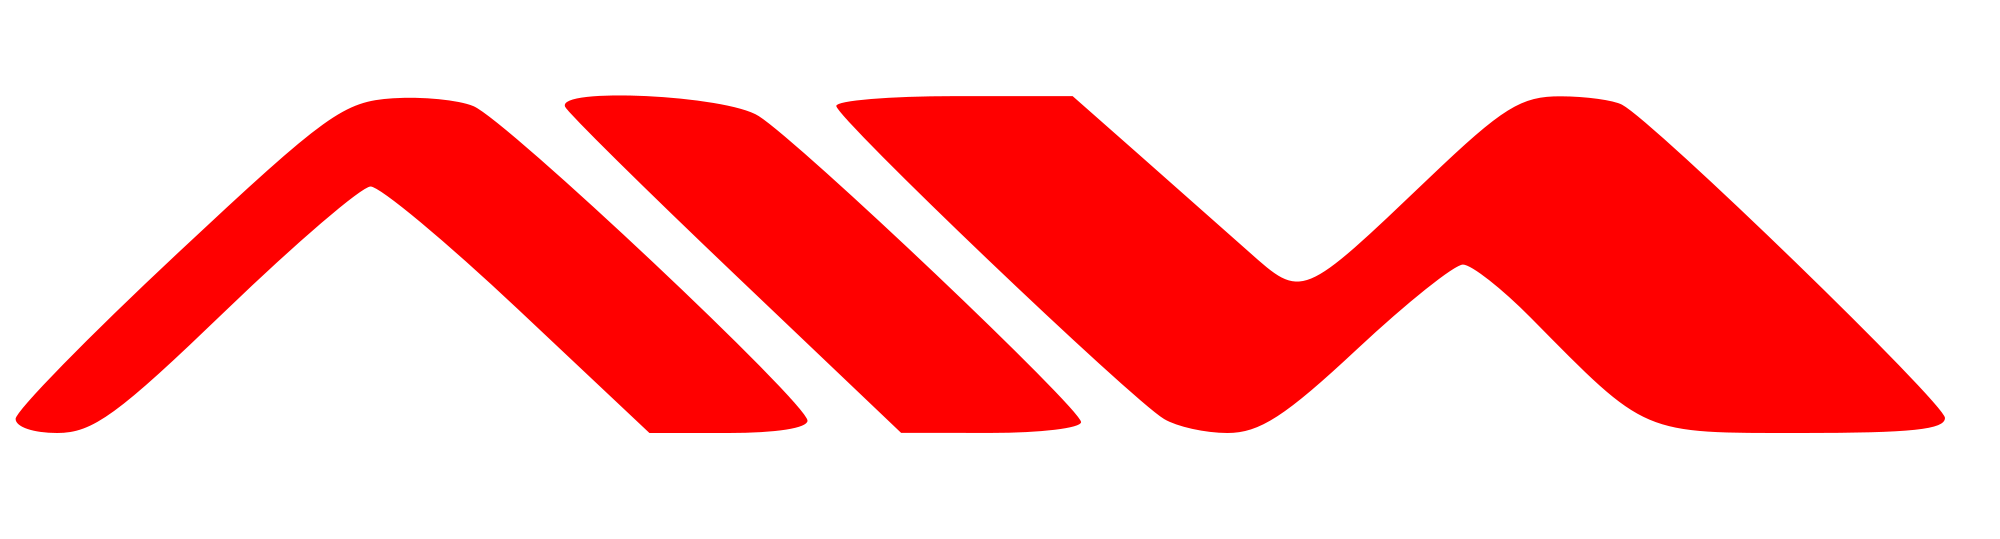 Red Electronic Logo - Aiwa Logo PNG Transparent Aiwa Logo PNG Image